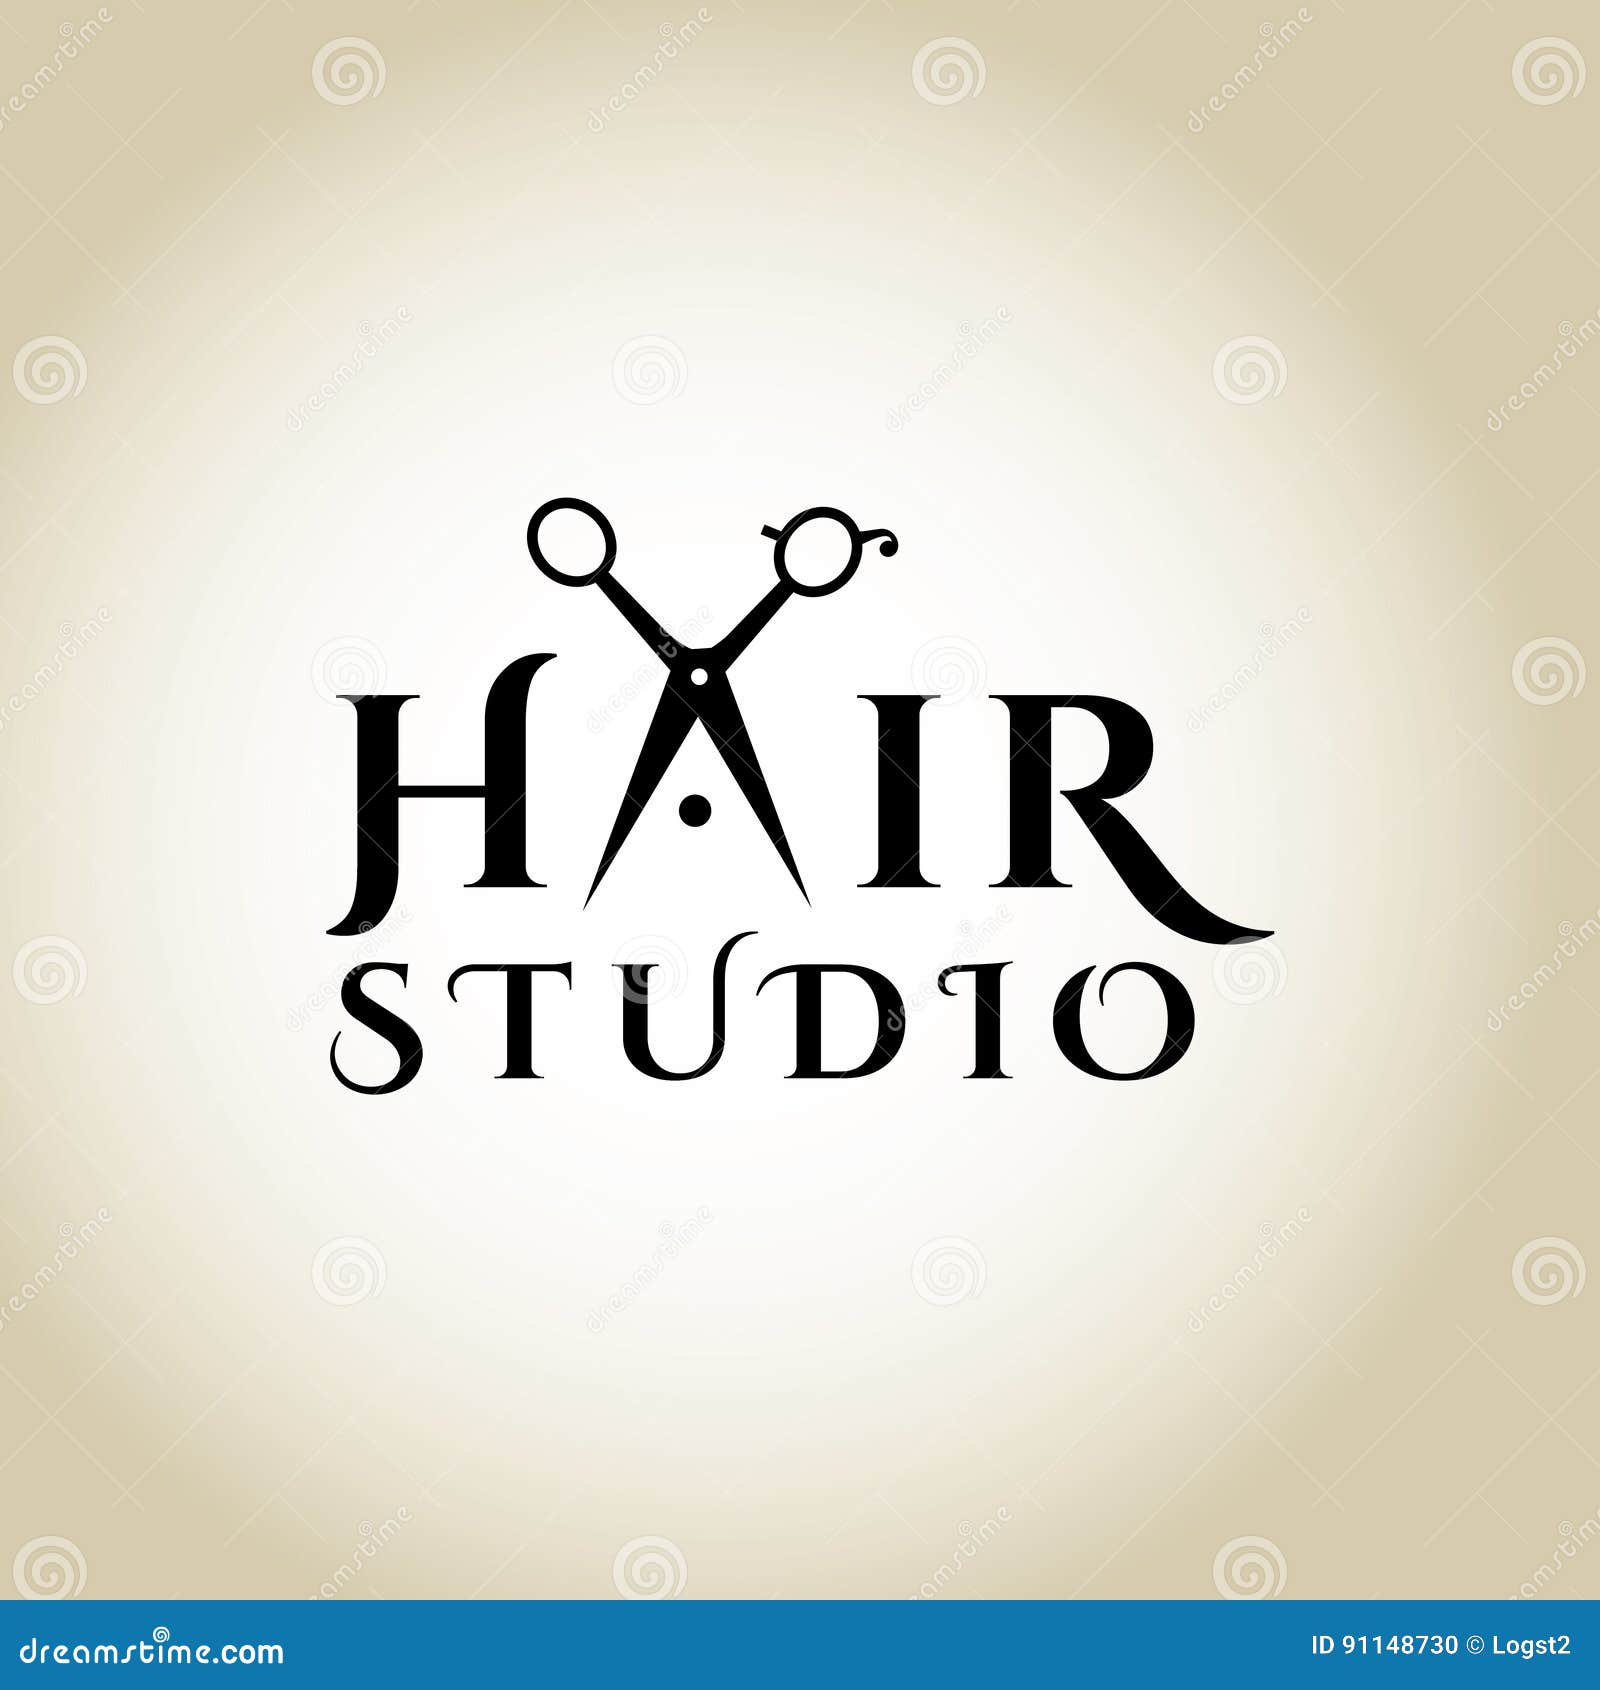 114790 Hair Salon Logo Images Stock Photos  Vectors  Shutterstock